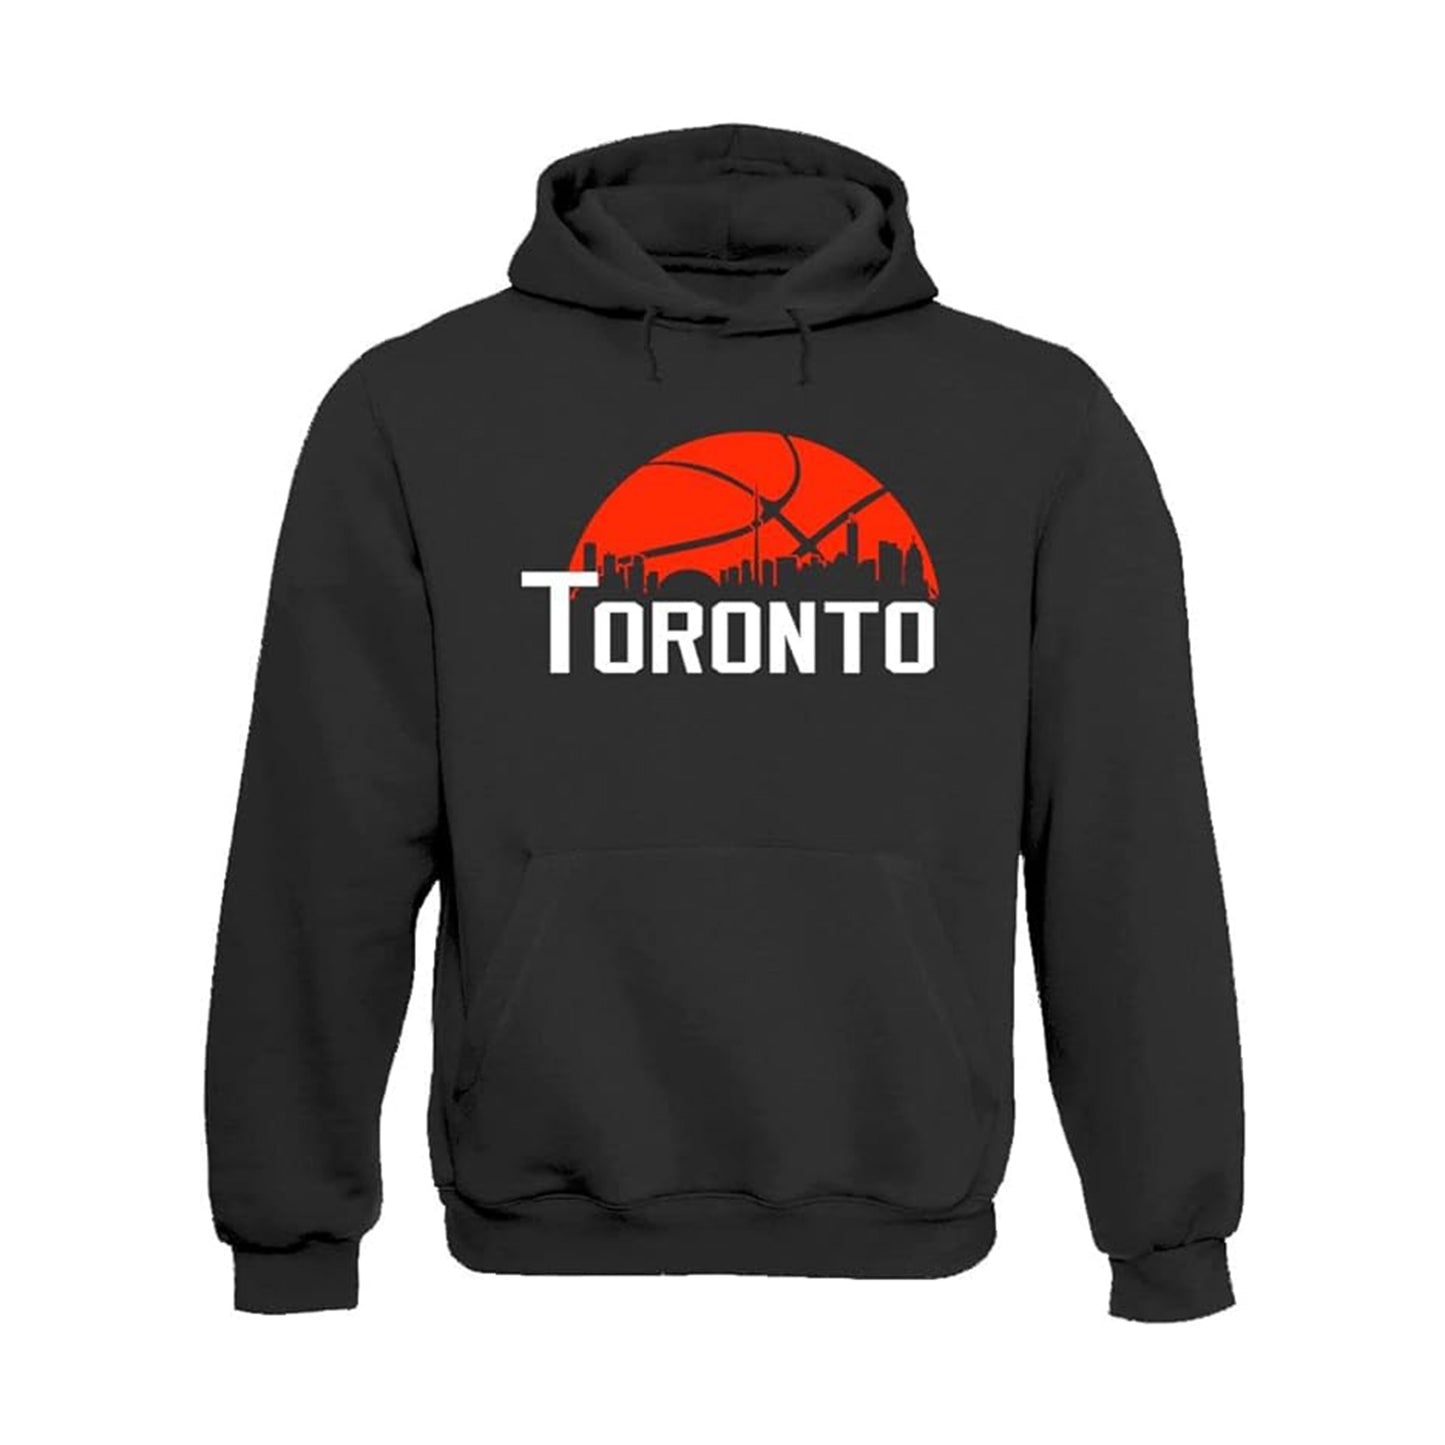 Toronto Basketball Team Cityscape Skyline Men's Apparel for Basketball Fans